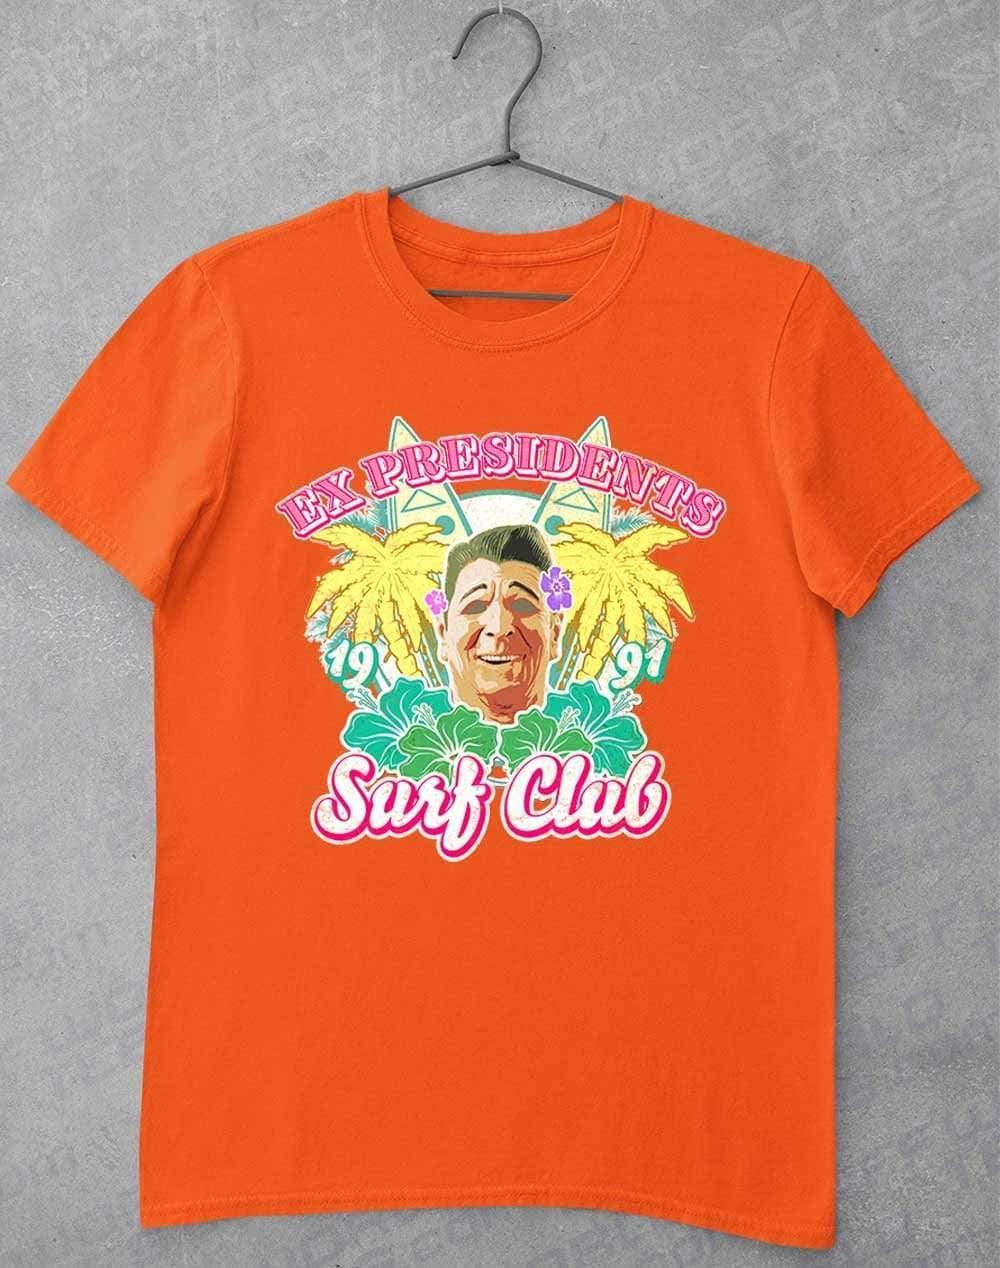 Ex Presidents Surf Club T-Shirt S / Orange  - Off World Tees